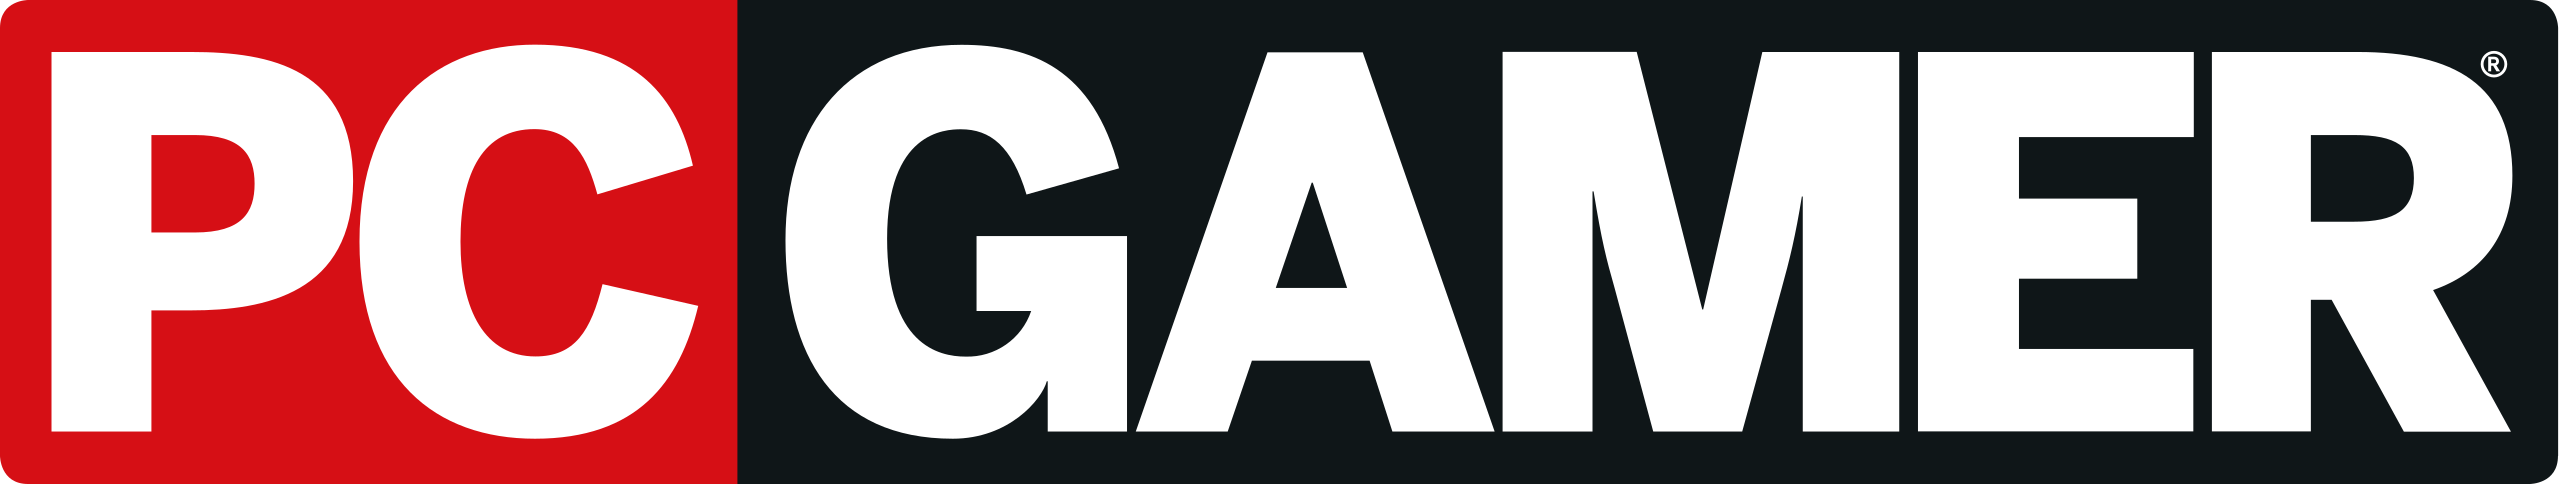 PC_Gamer_logo_(2015-present).svg